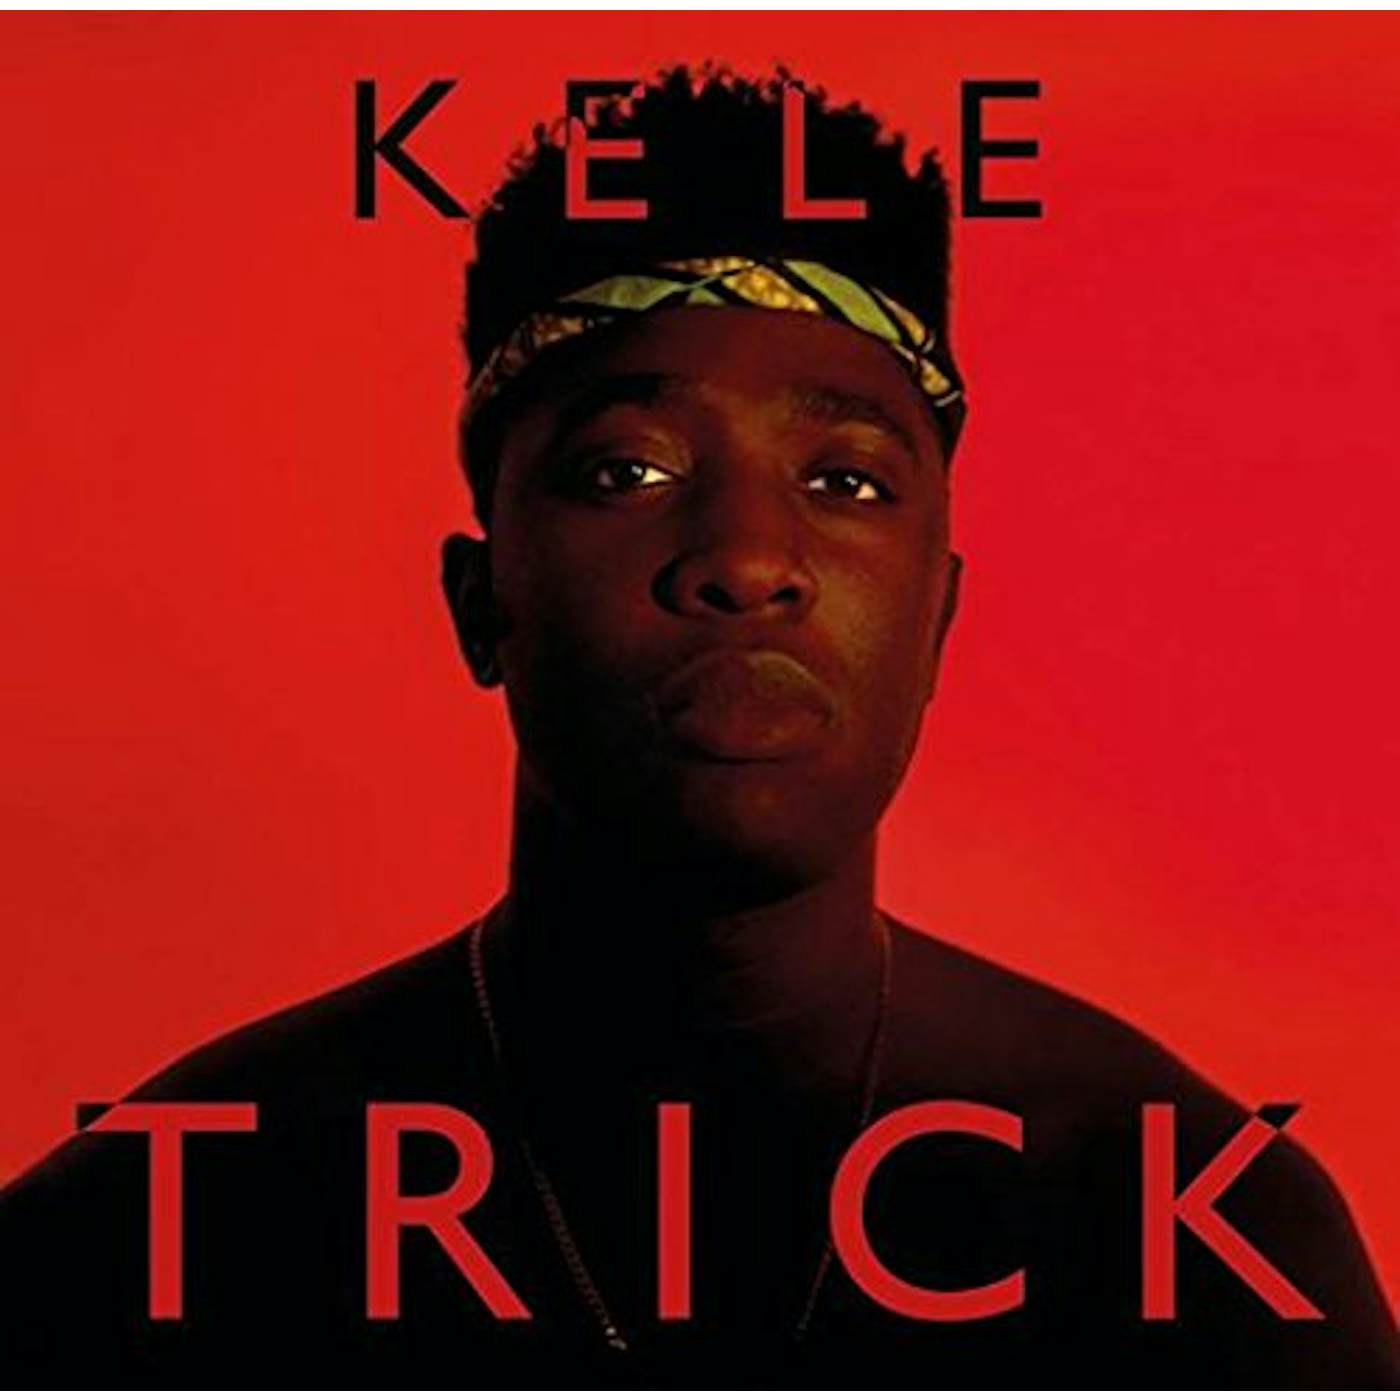 Kele Trick Vinyl Record